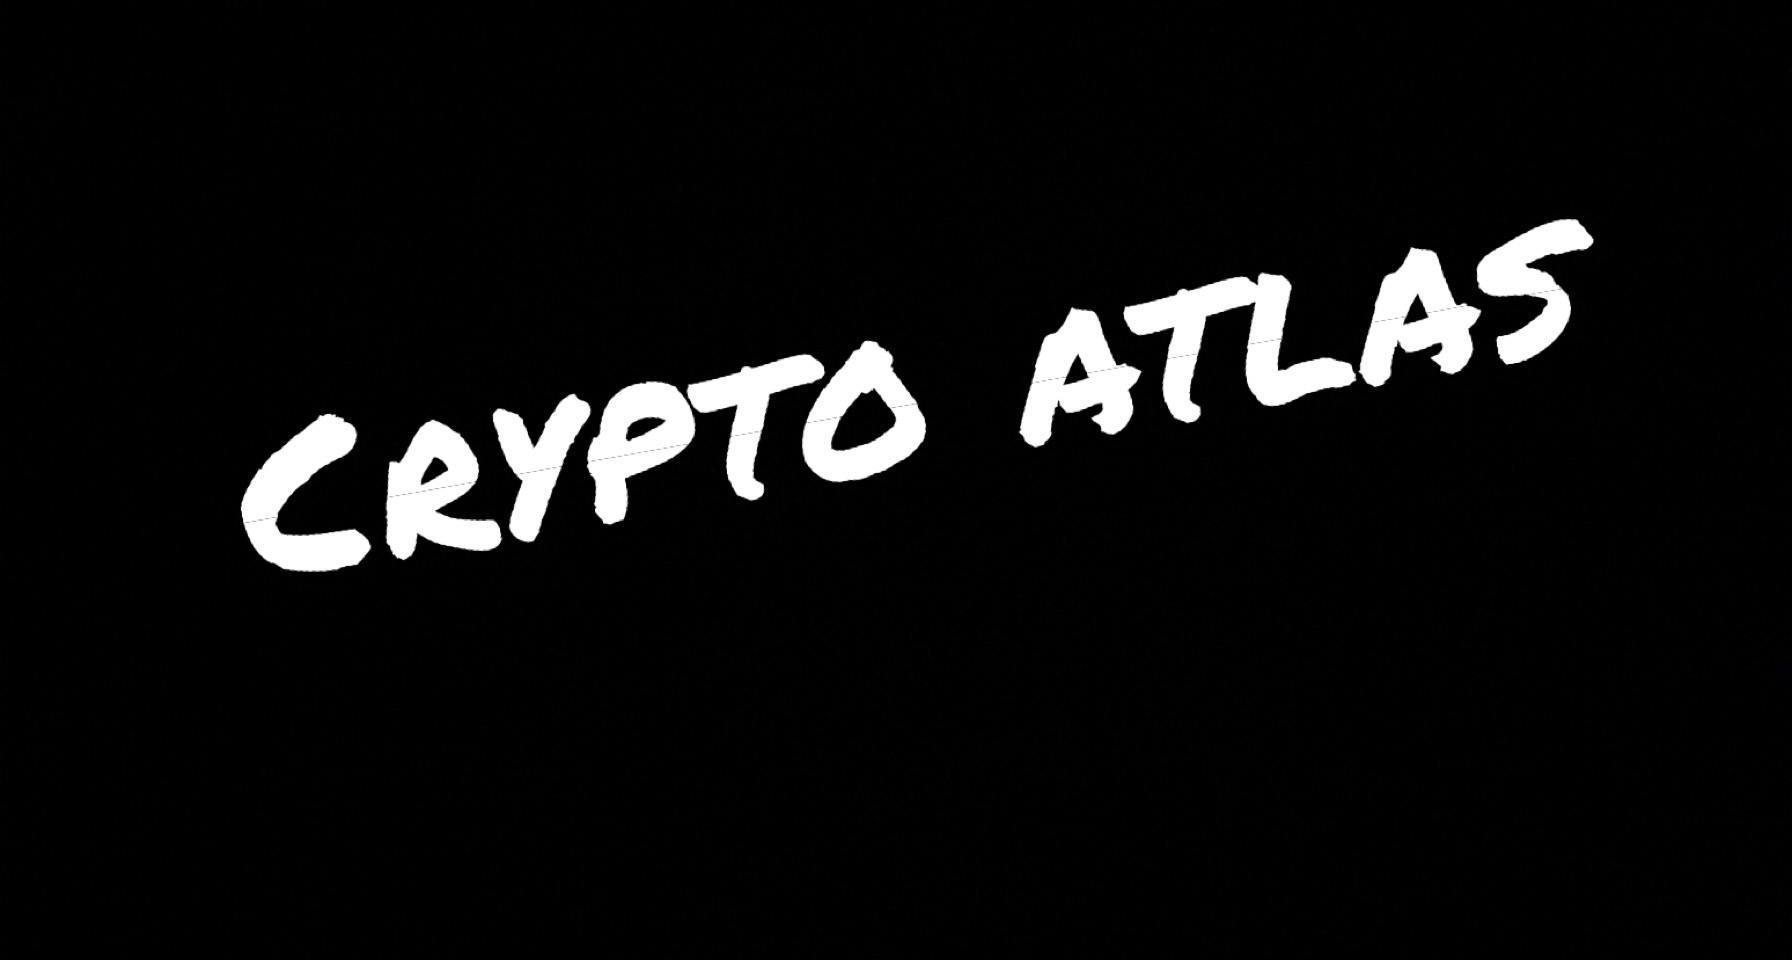 CryptoAtlas1 バナー